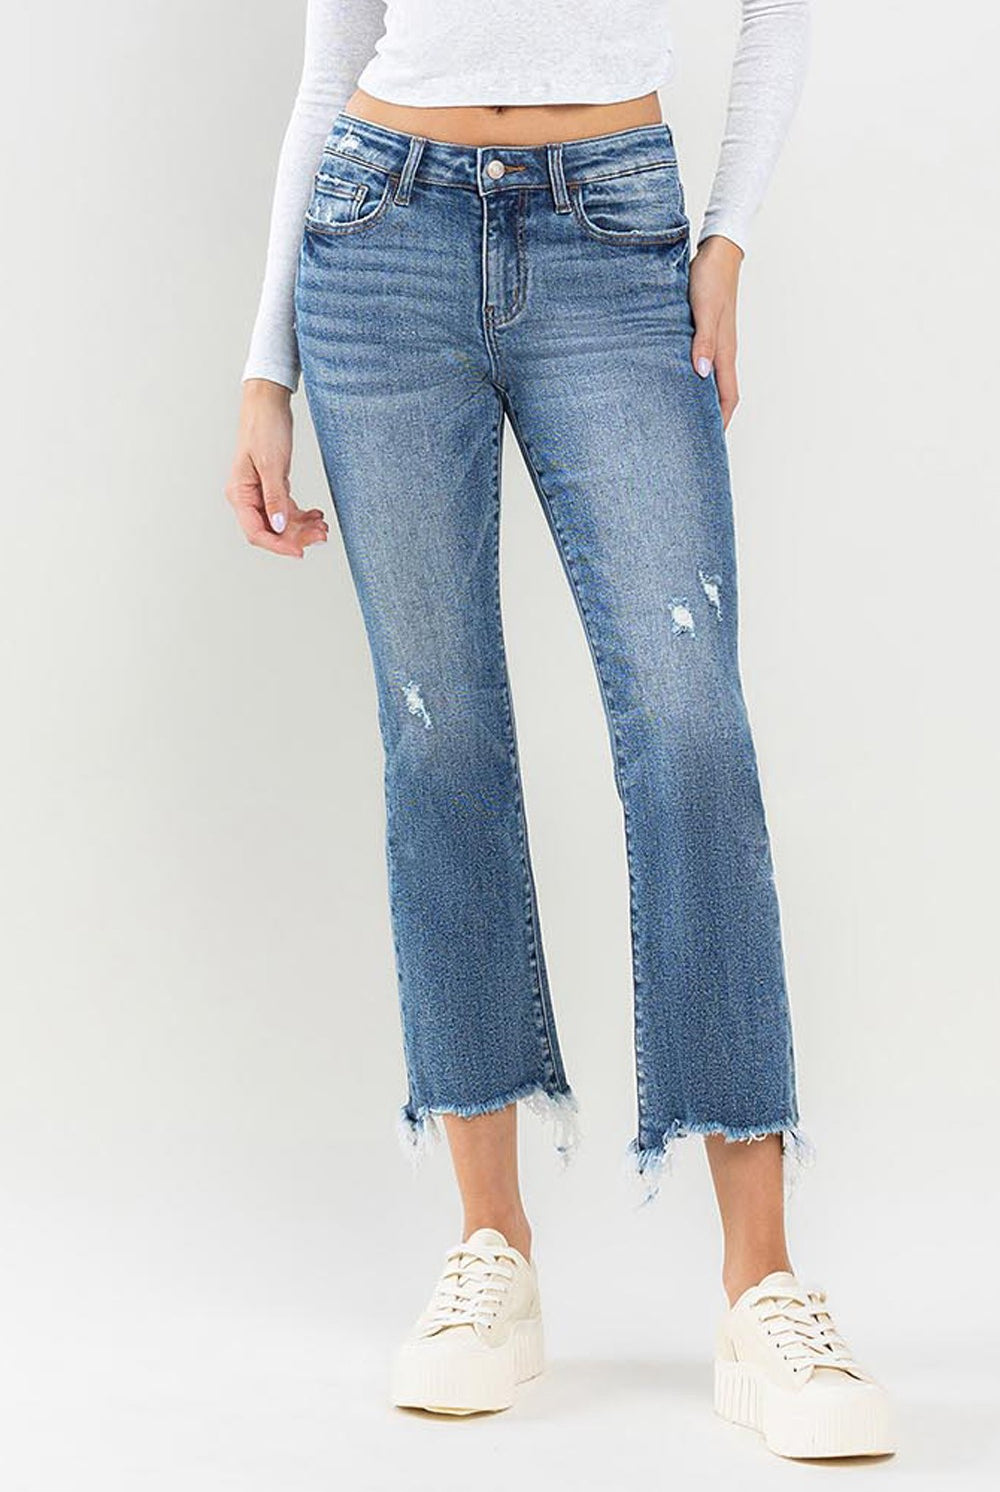 Lovervet Mid Rise Frayed Hem Jeans - GemThreads Boutique Lovervet Mid Rise Frayed Hem Jeans